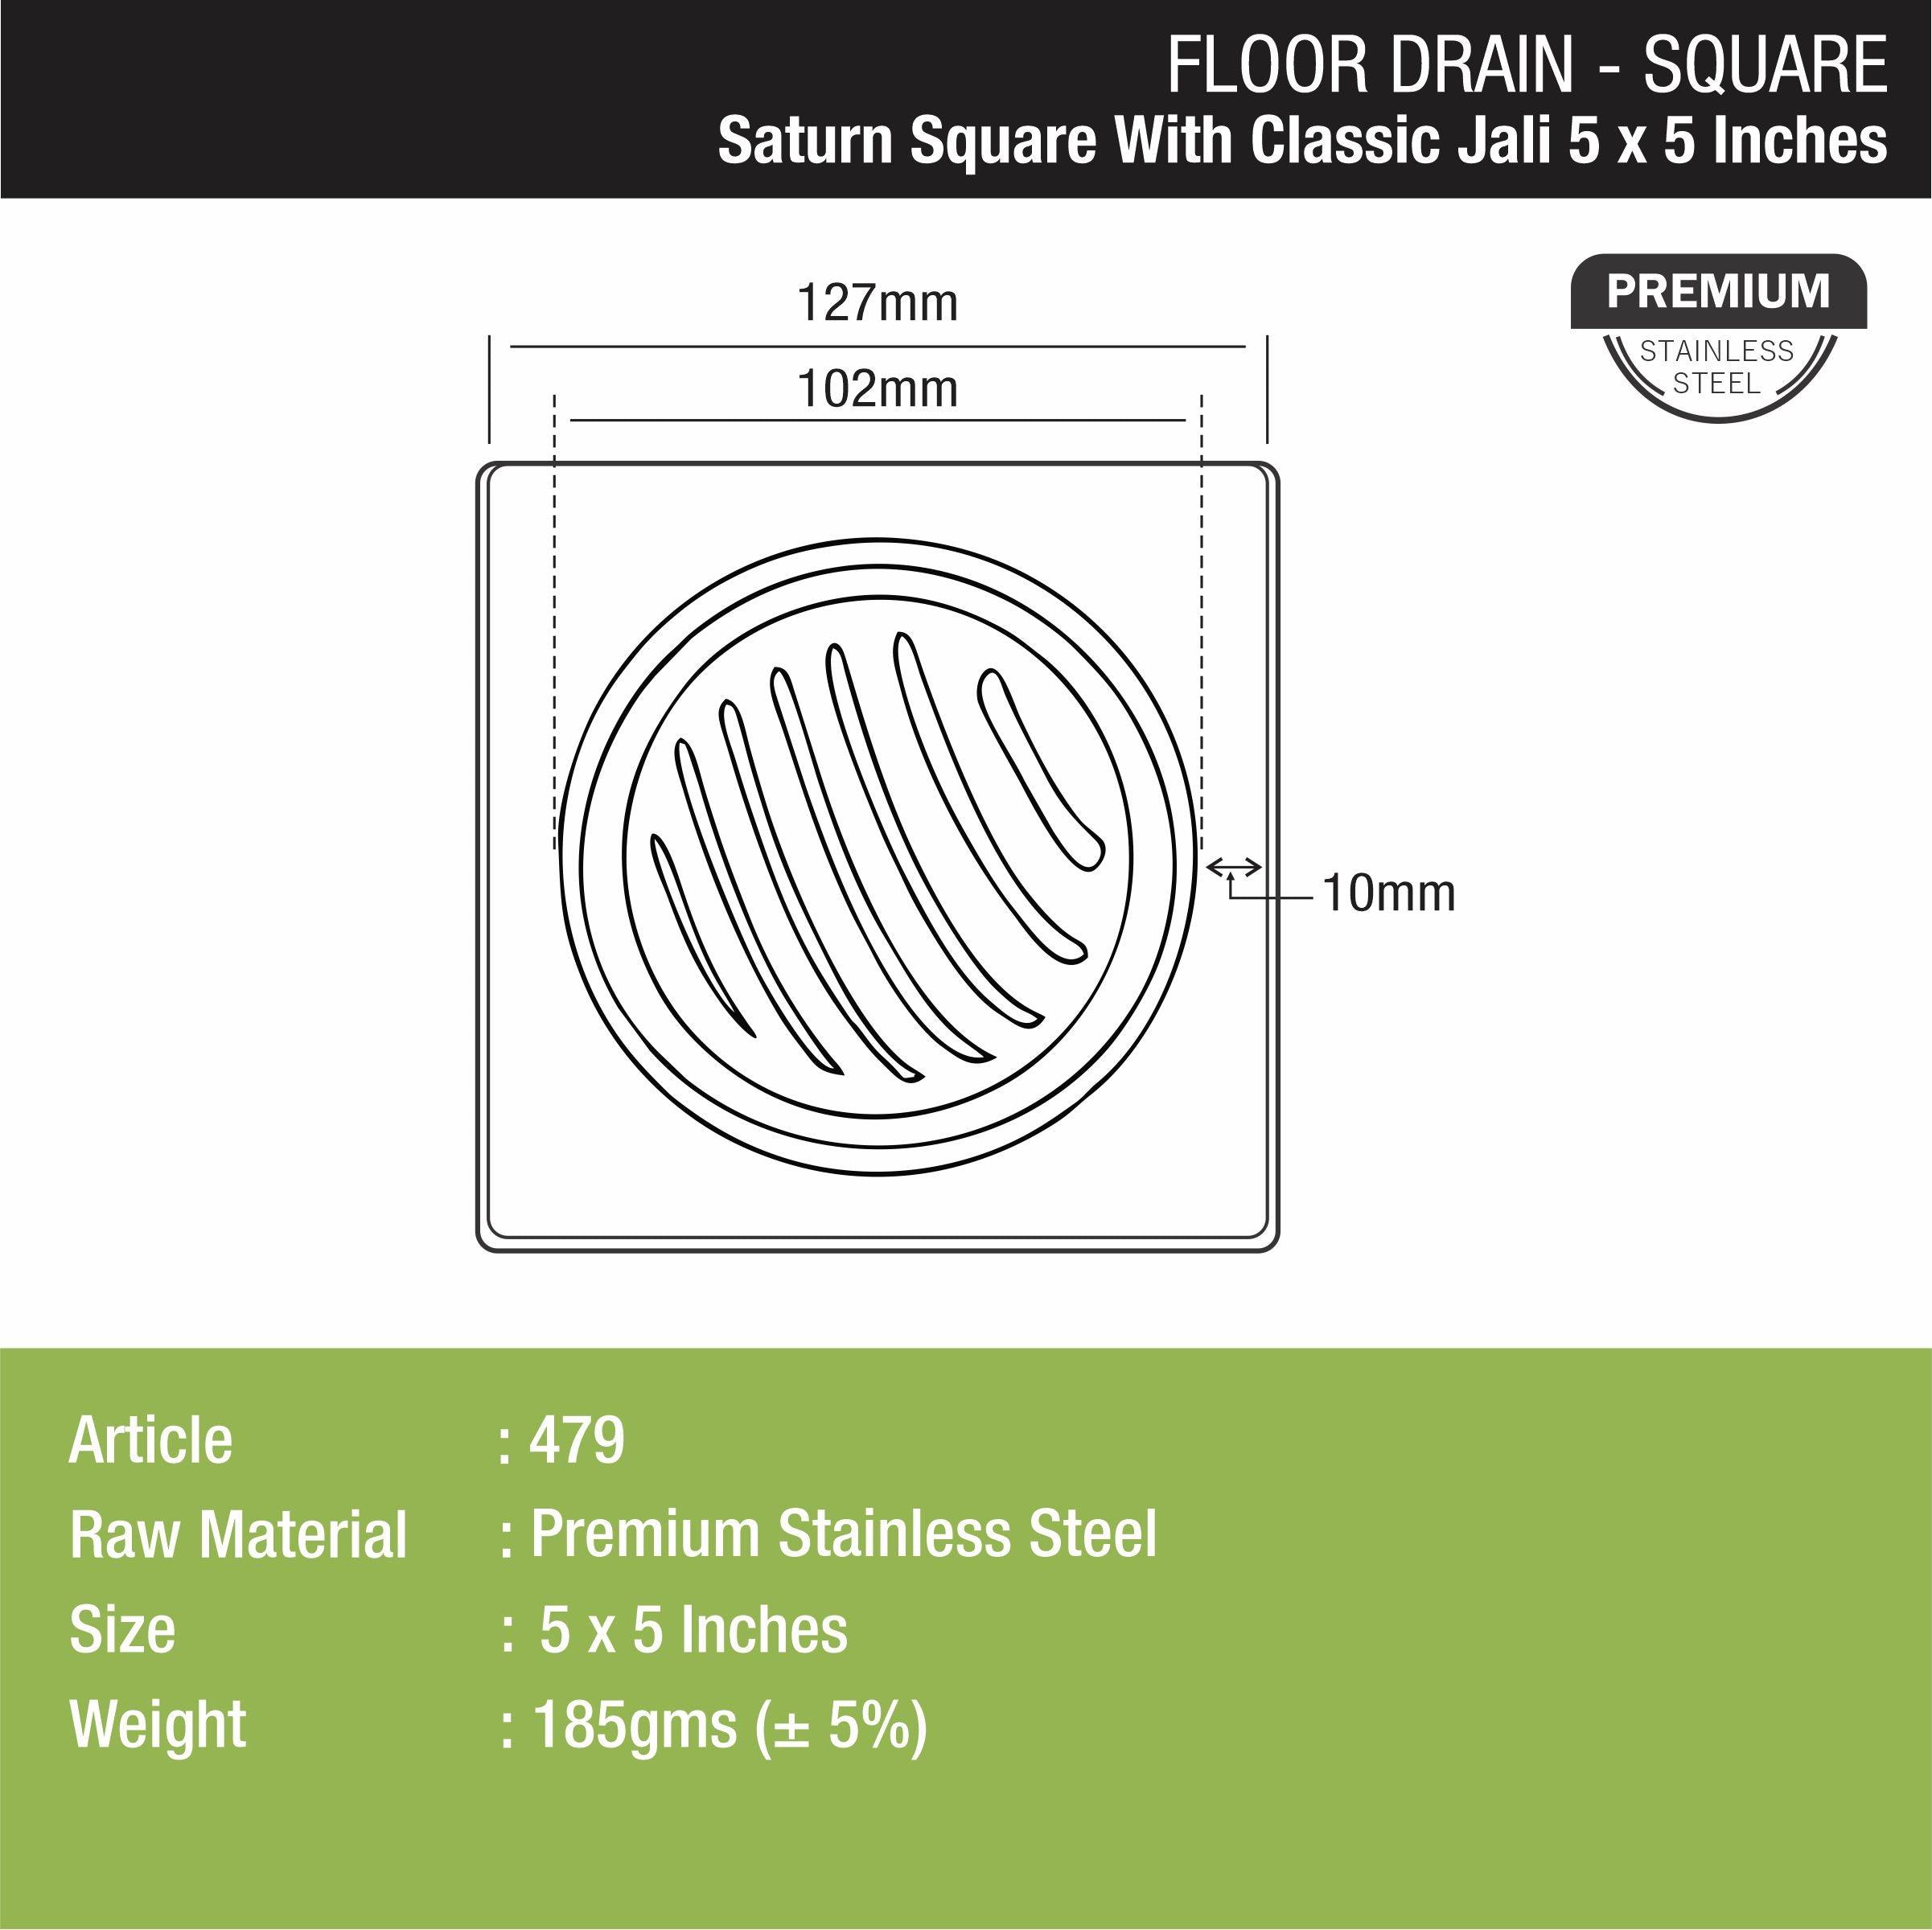 Saturn Square Floor Drain with Classic Jali (5 x 5 Inches) - LIPKA - Lipka Home